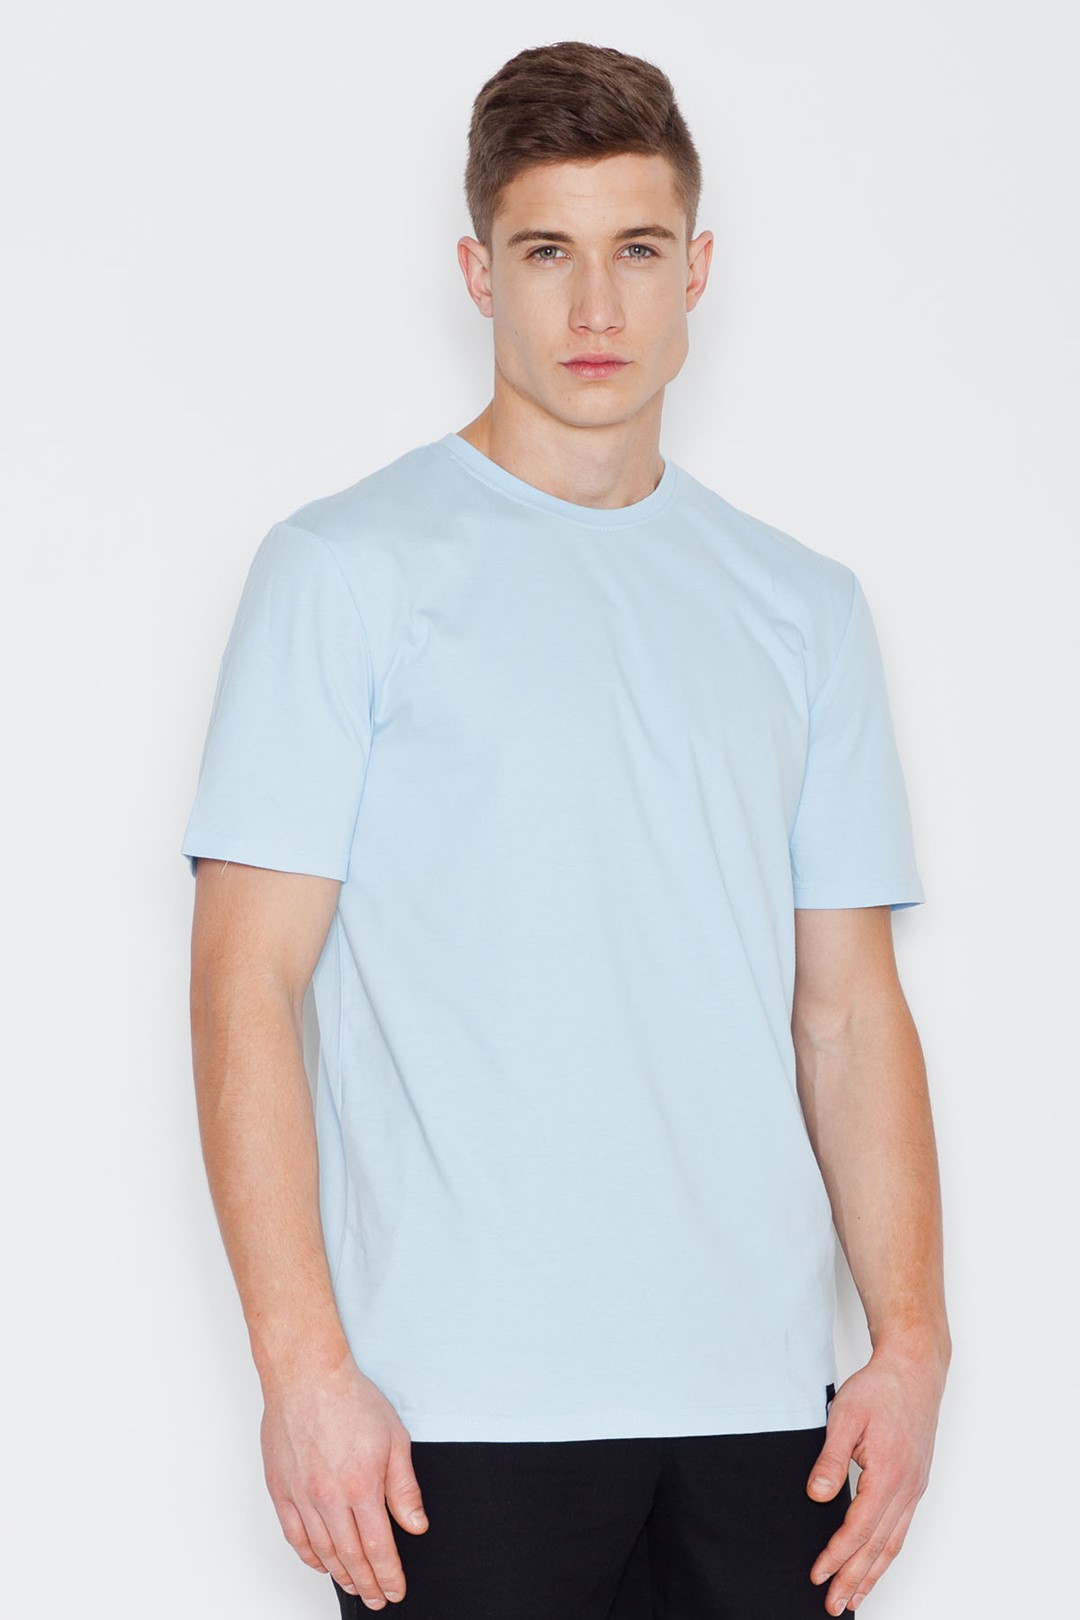 T-shirt V001 Light blue XL